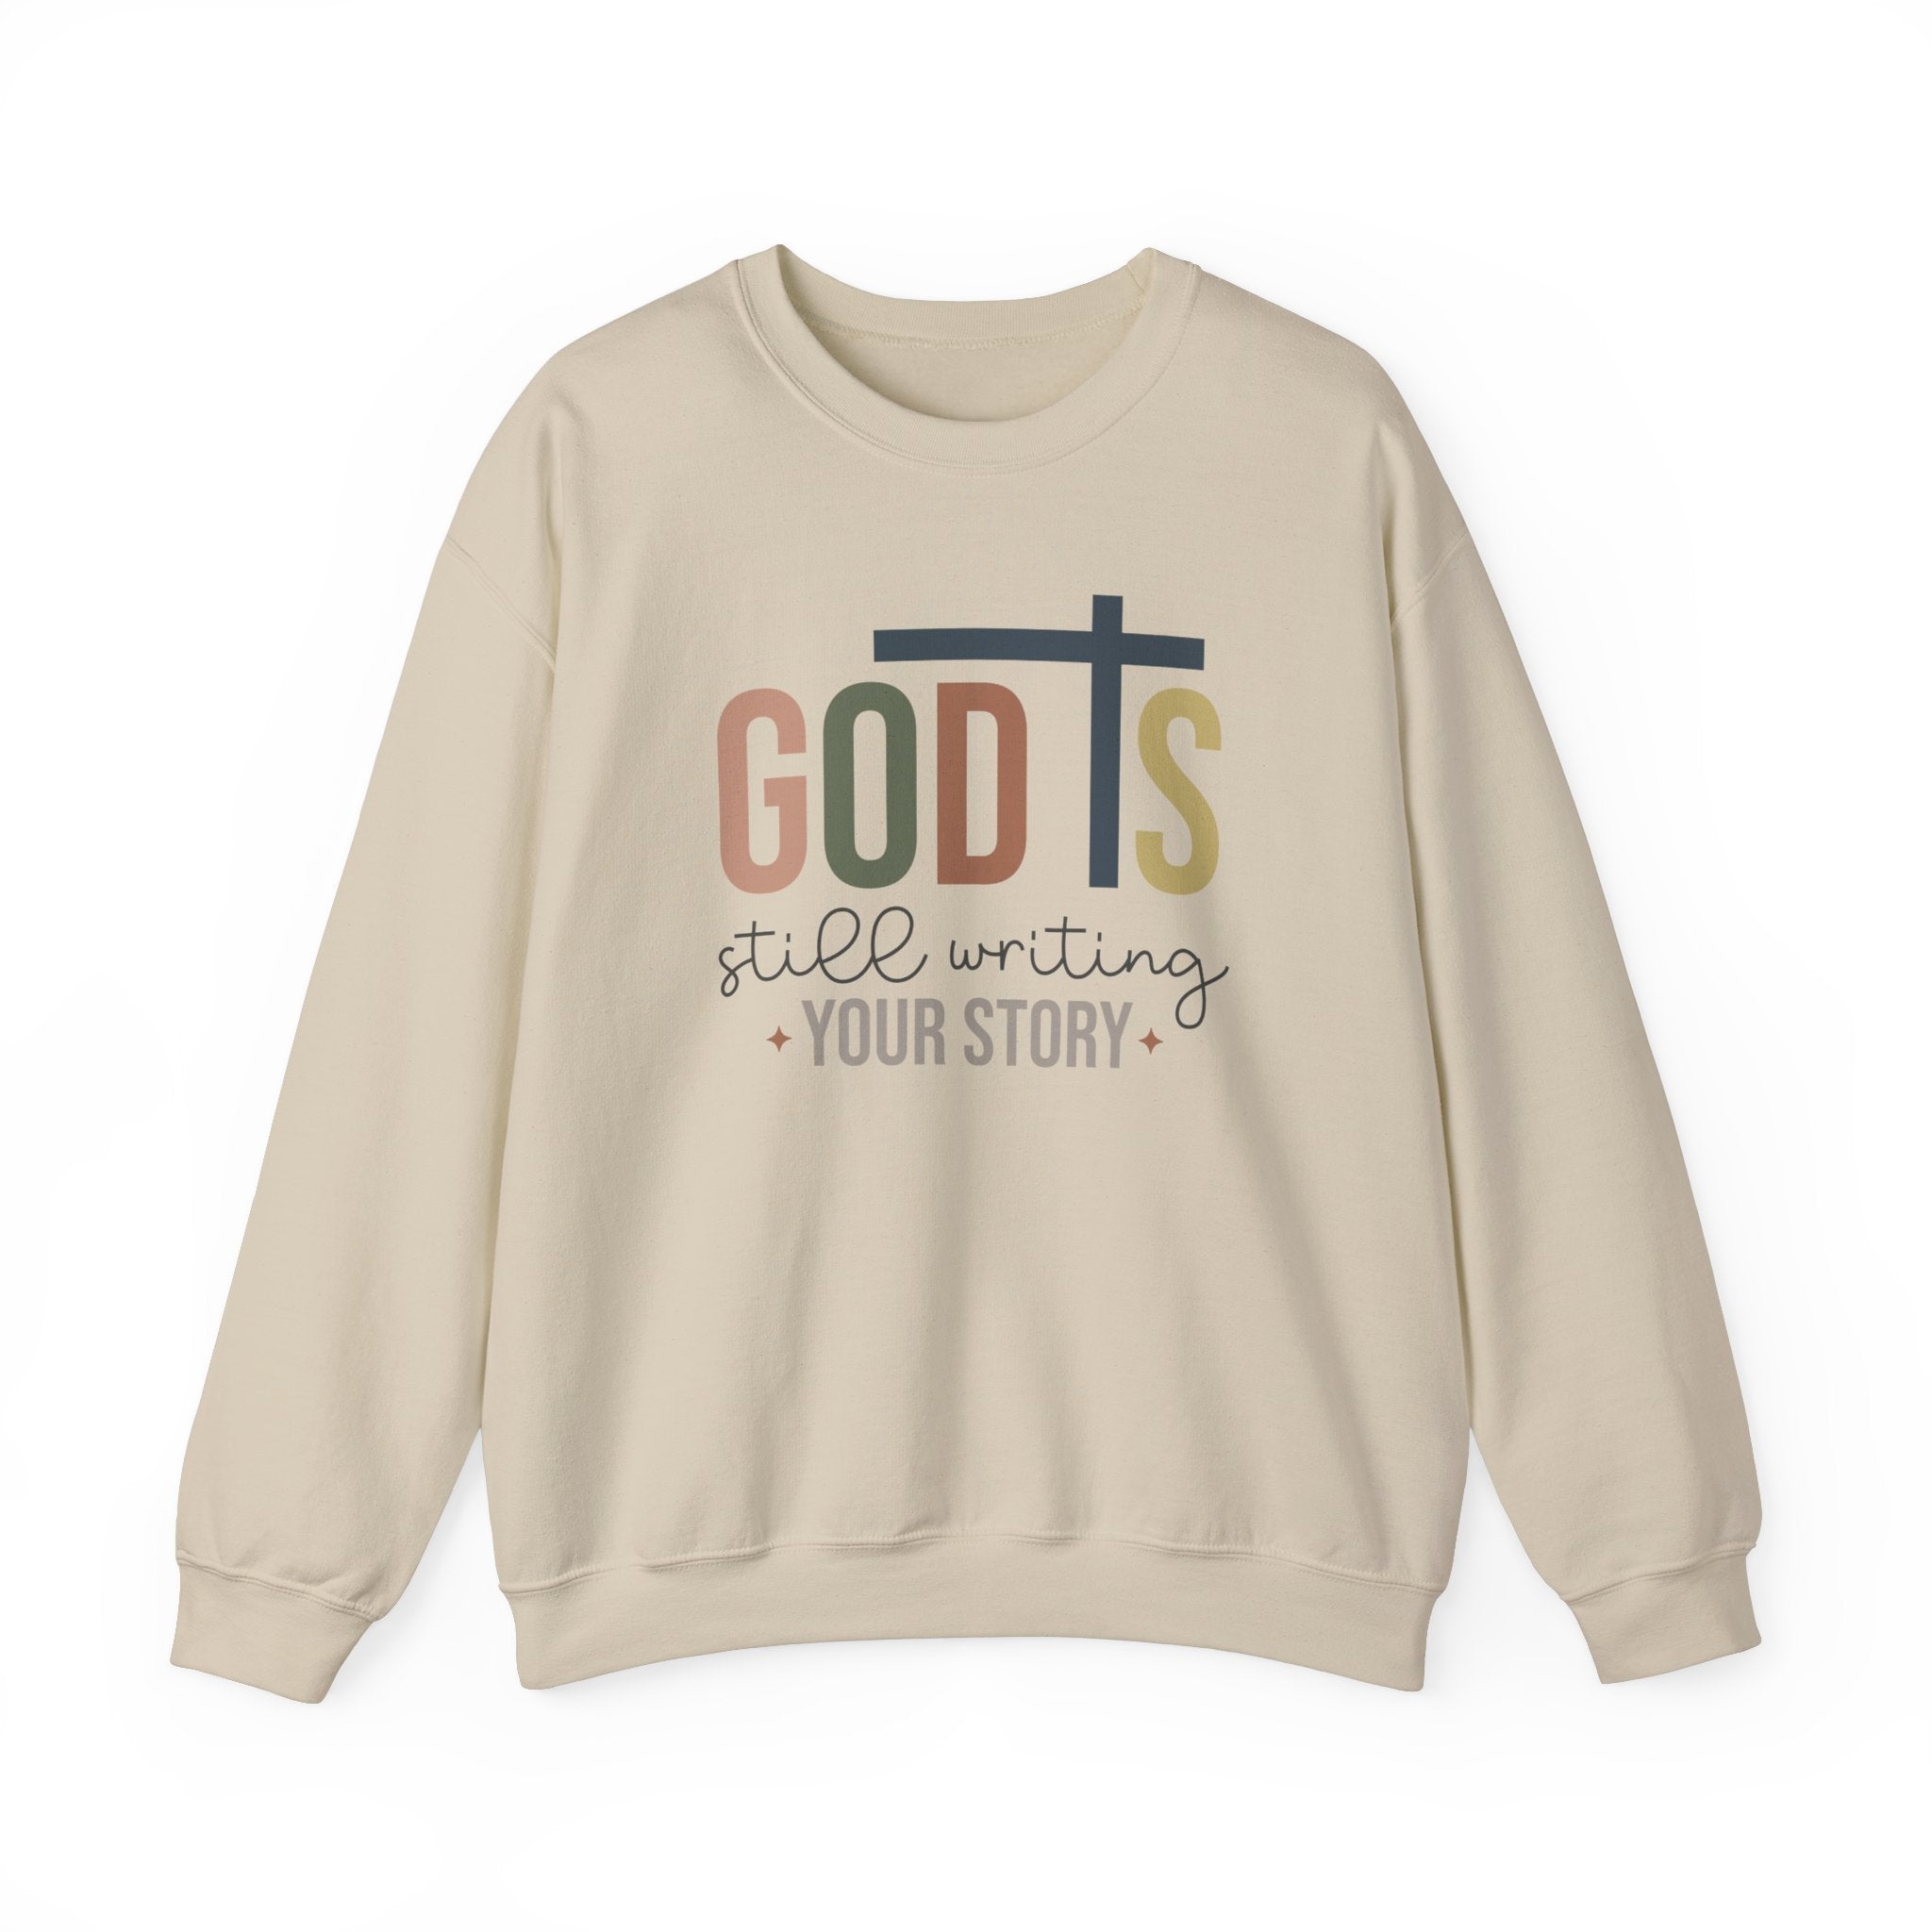 God is still writing your story ladies Heavy Blend Sweatshirt.